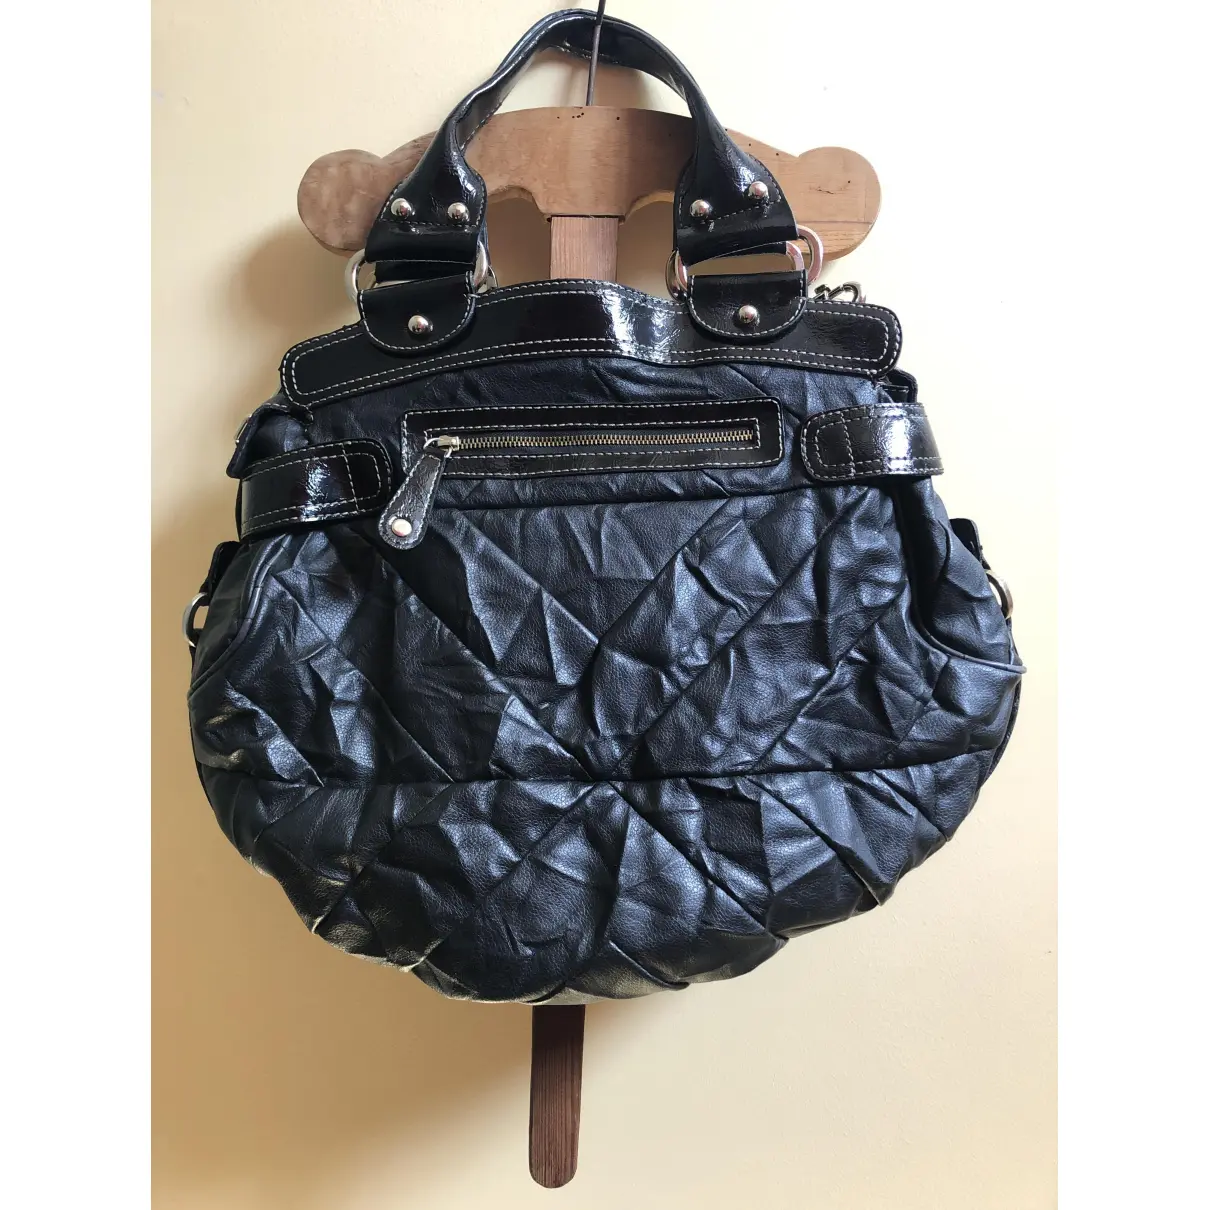 Buy GUESS Leather handbag online